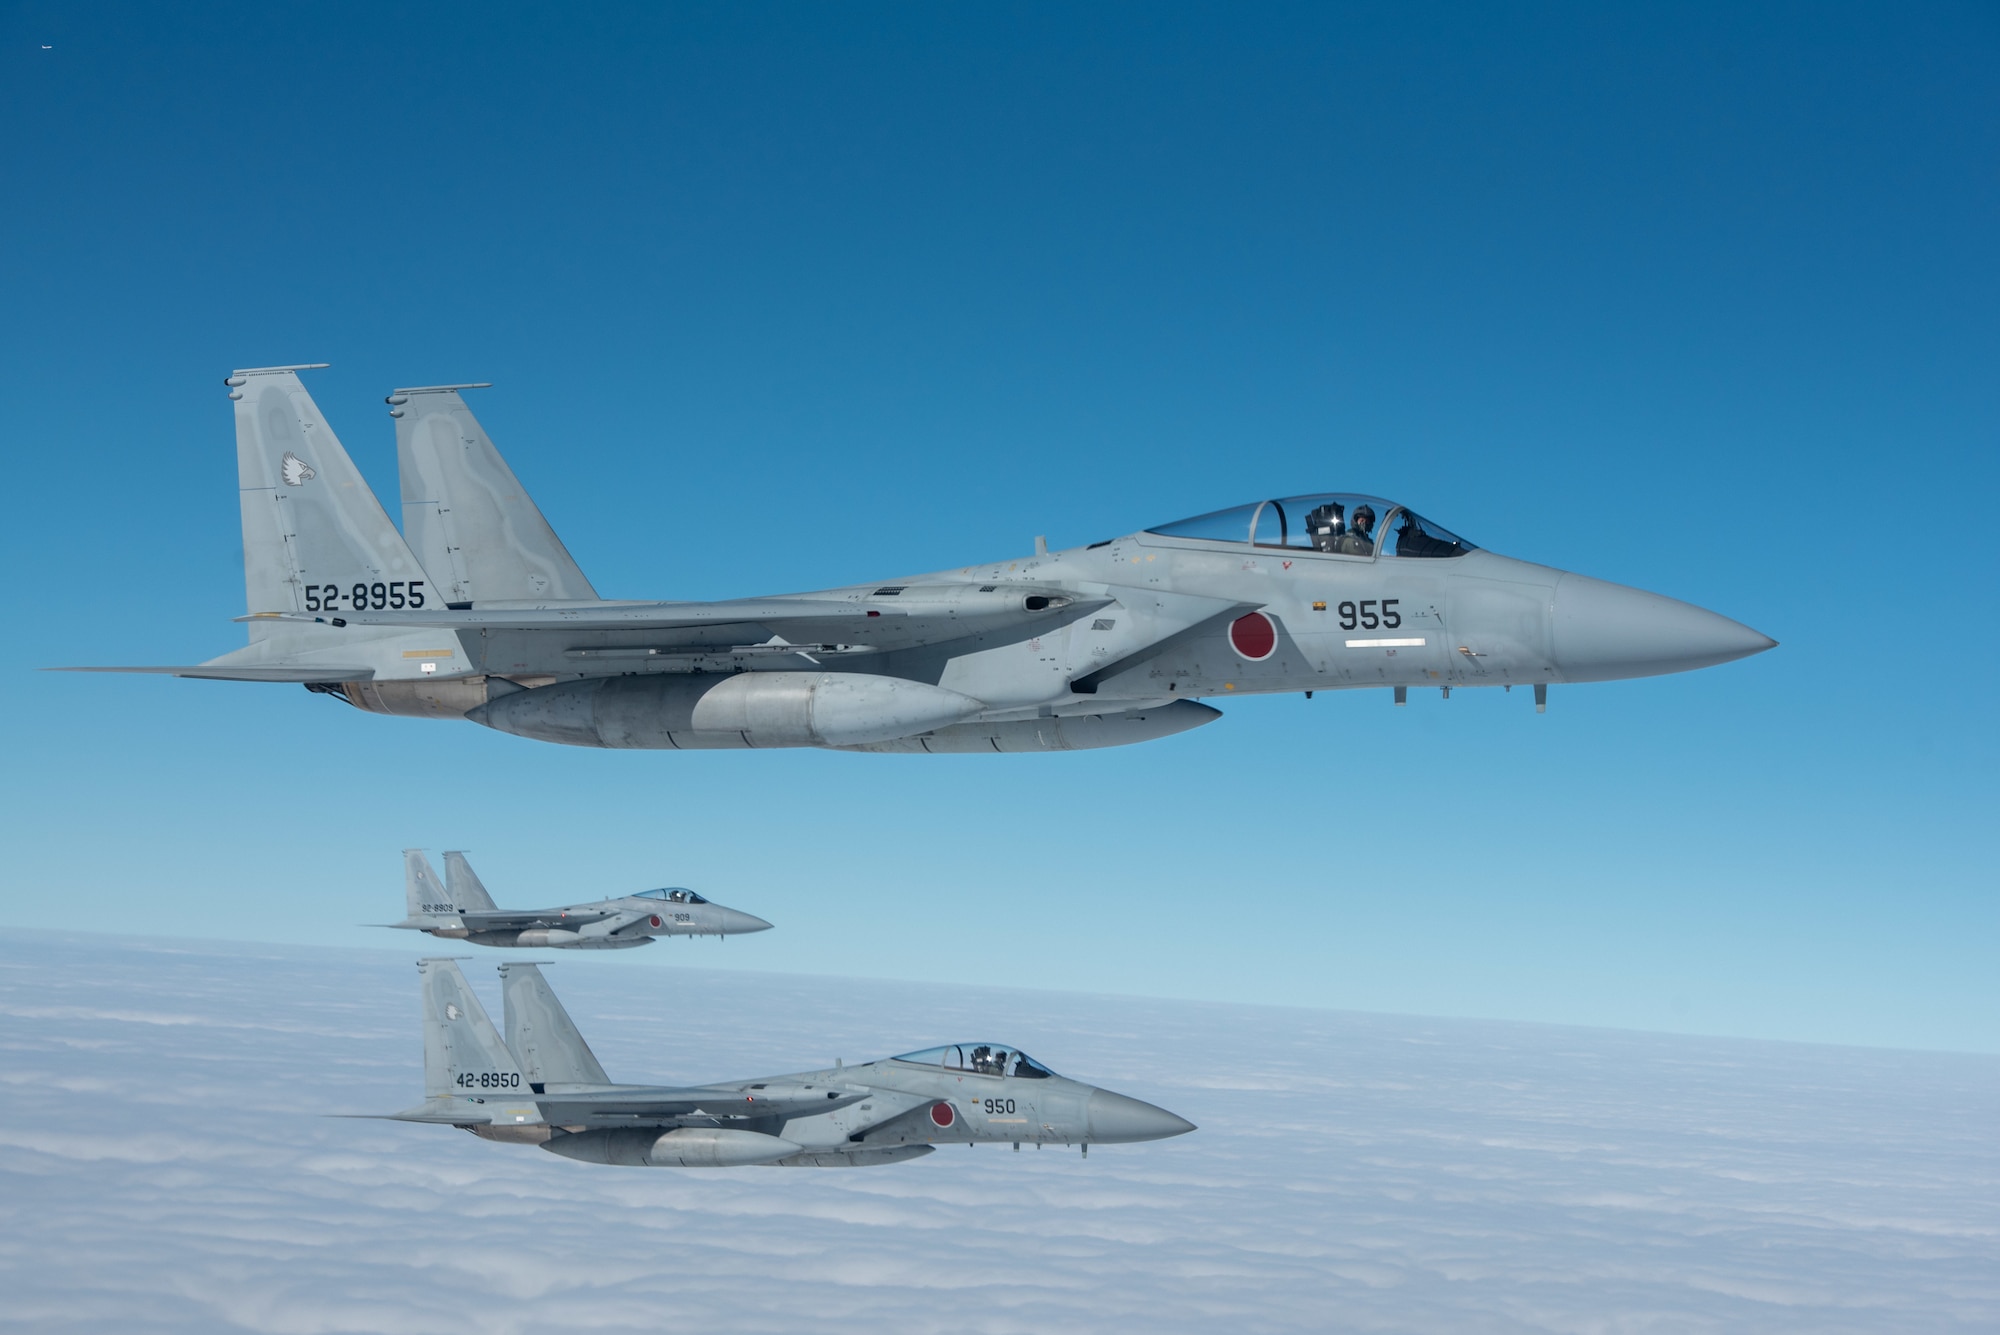 Three Japan Air Self-Defense Force F-15J Eagles fly alongside a U.S. Air Force KC-135 Stratotanker